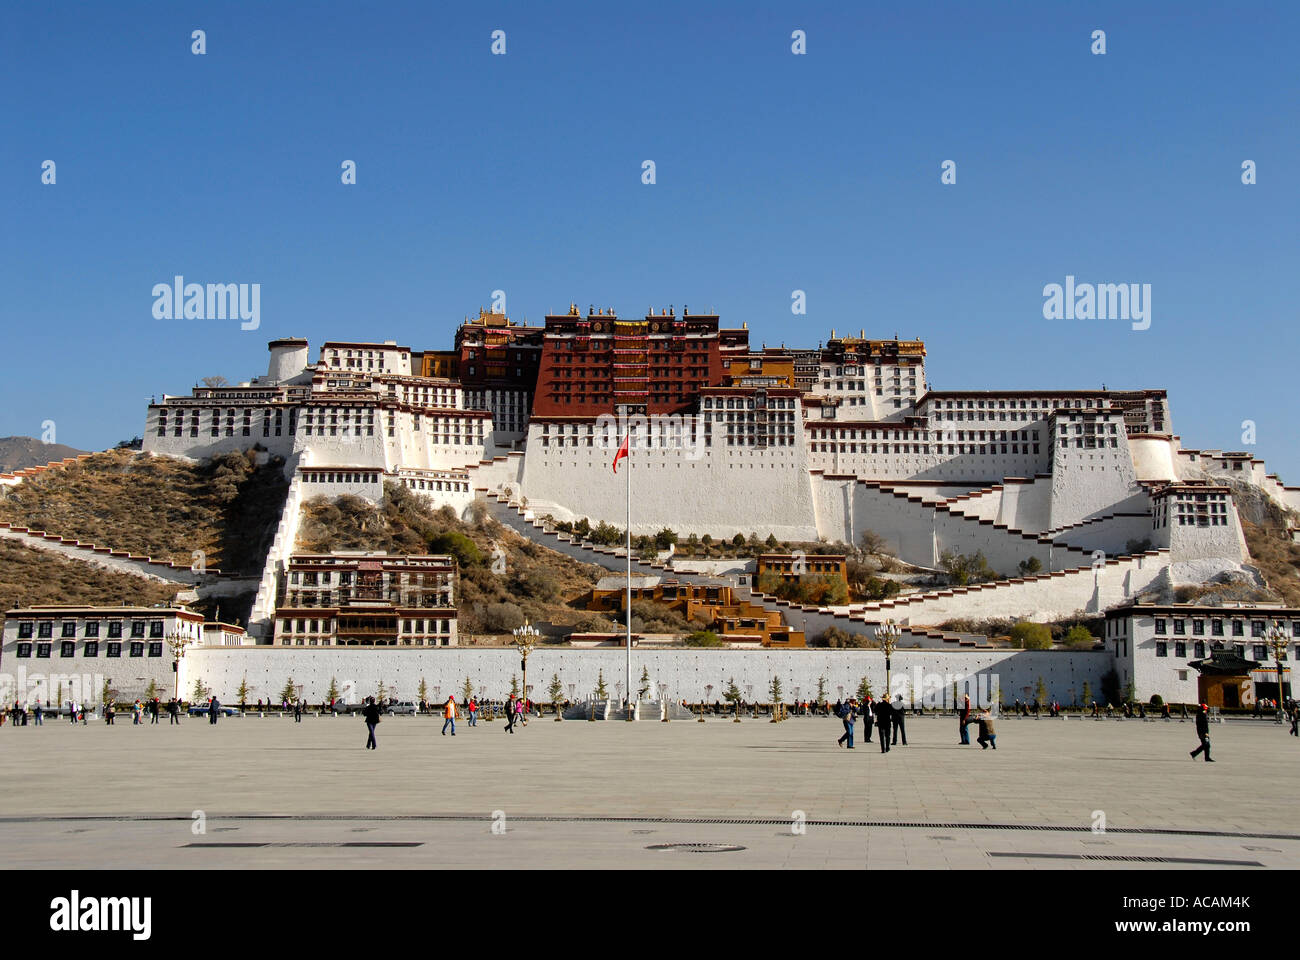 El Potala palacio de invierno del Dalai Lama Lhasa, Tibet, China Foto de stock